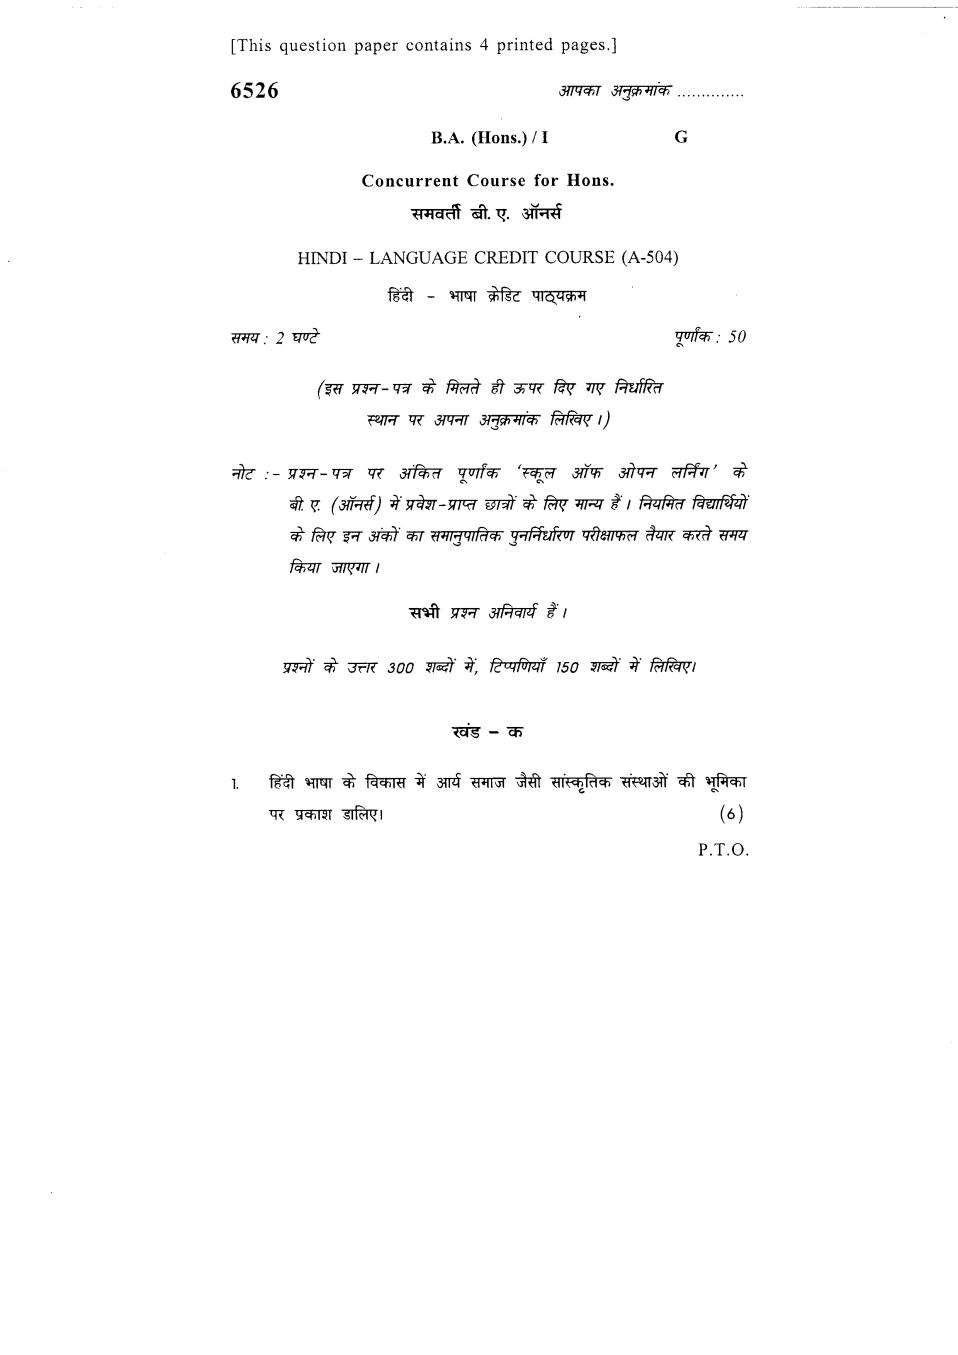 DU SOL Question Paper 2018 BA (Hons.) English - Hindi Language - Page 1